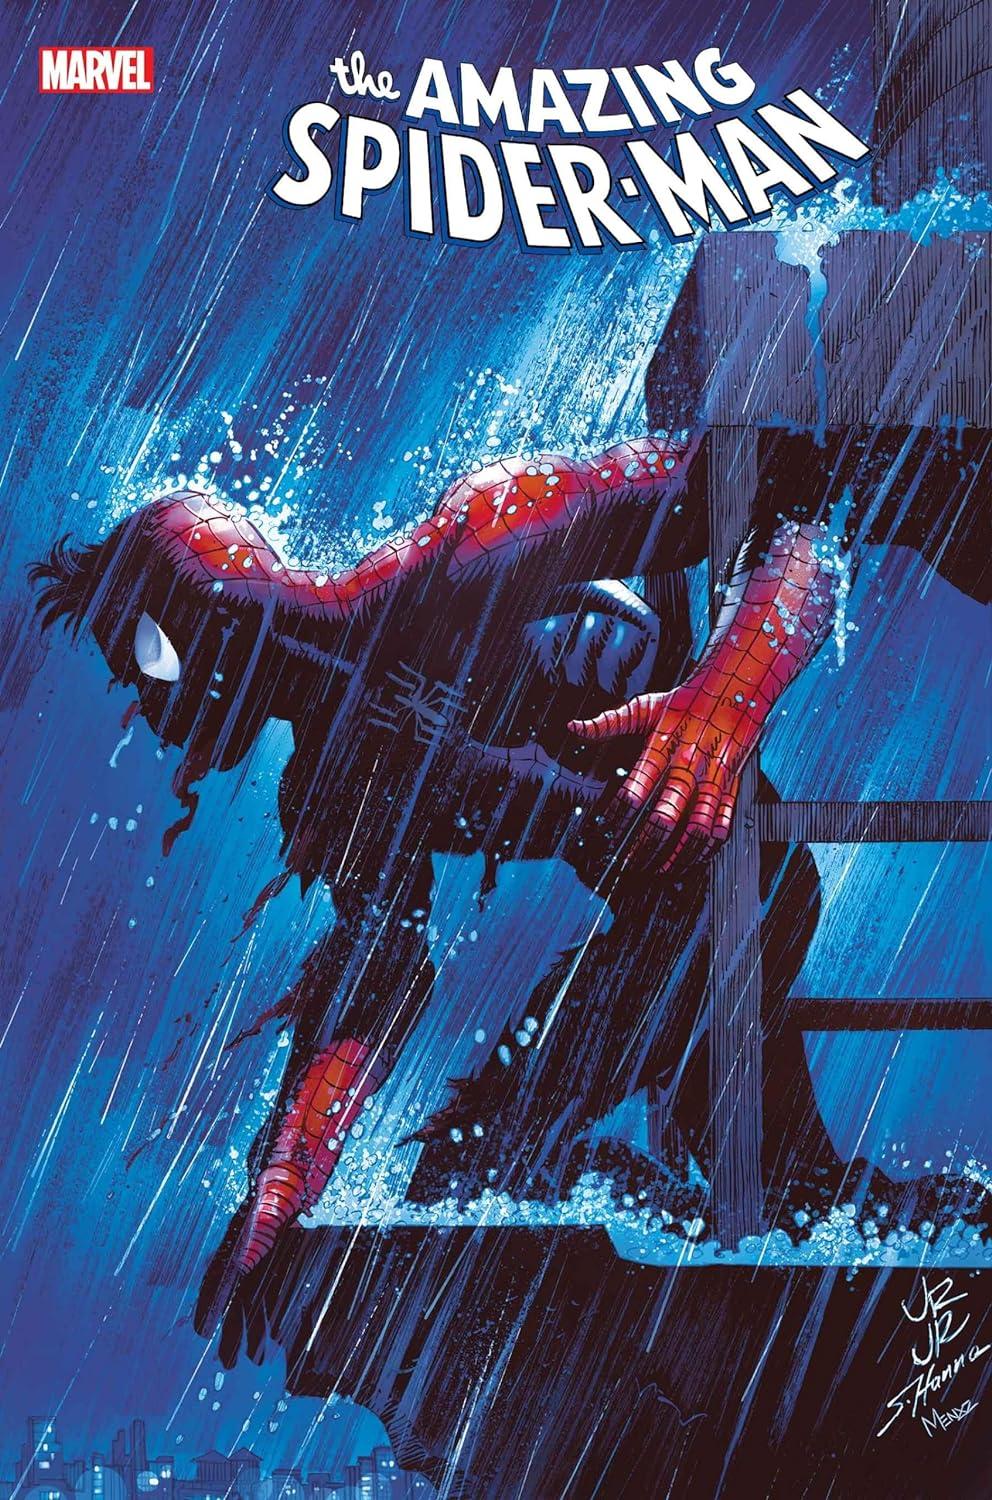 Amazing Spider-Man #45 cover art